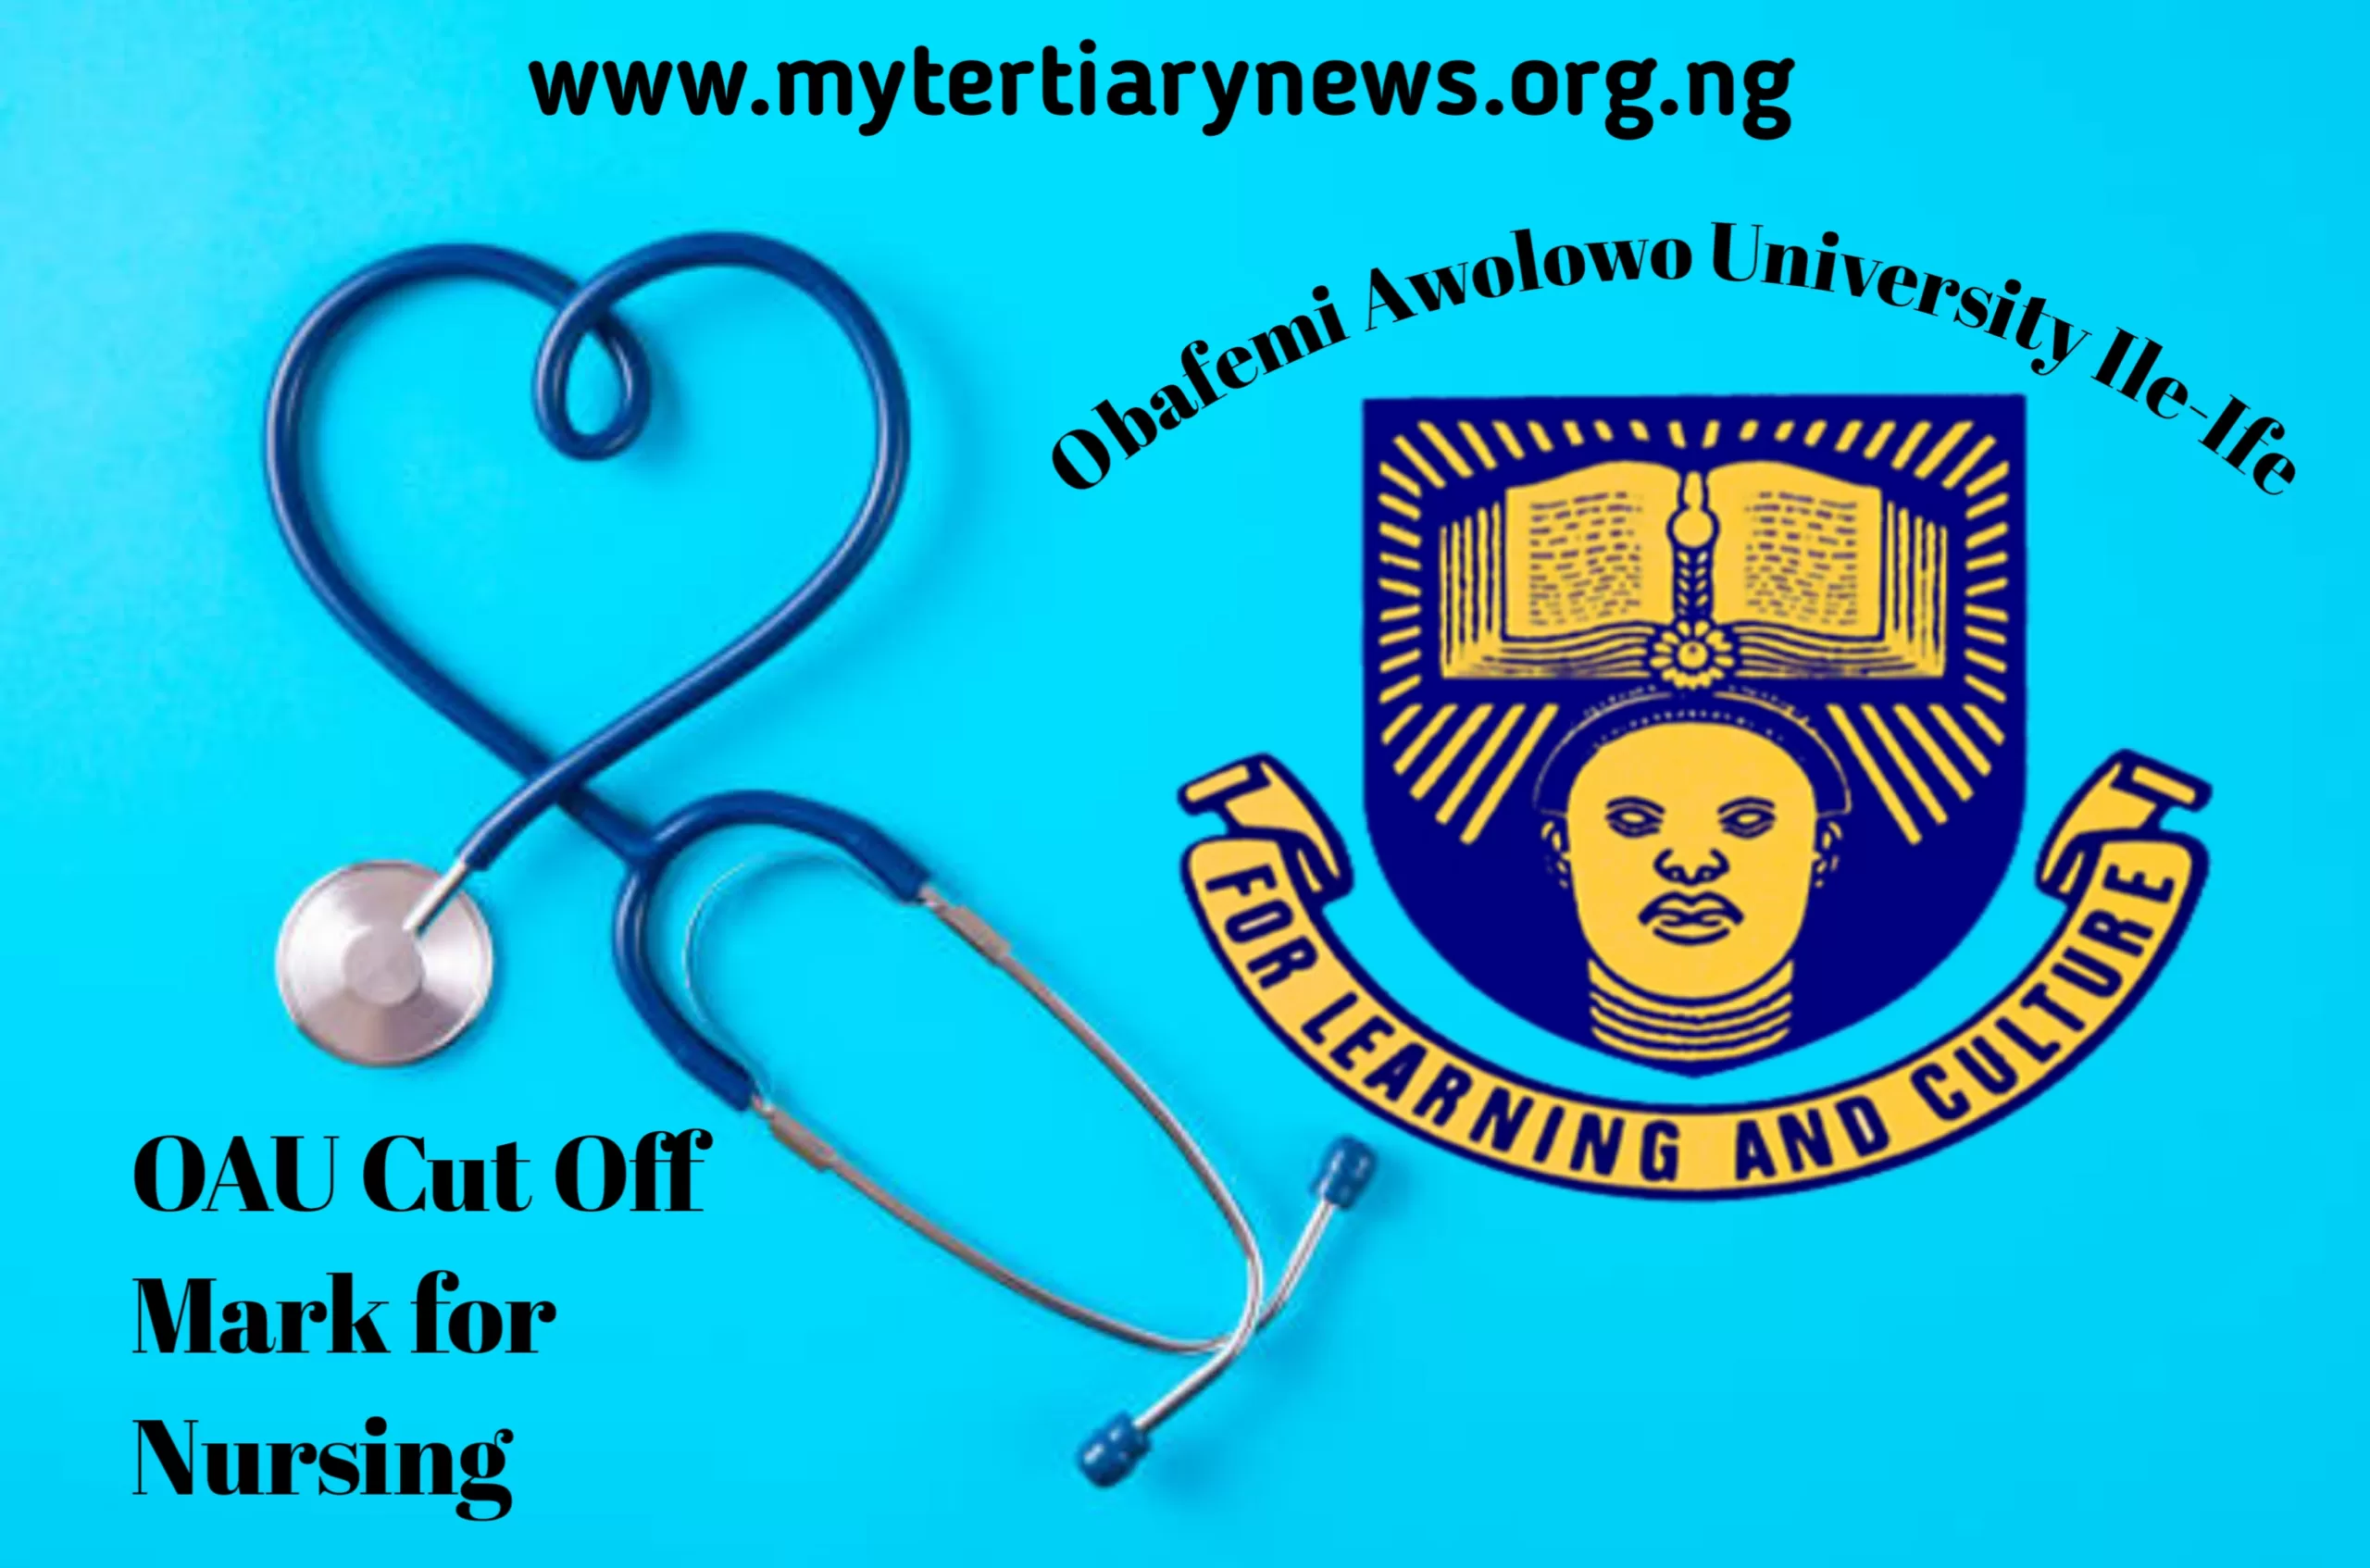 OAU Image || OAU Cut Off Mark for Nursing